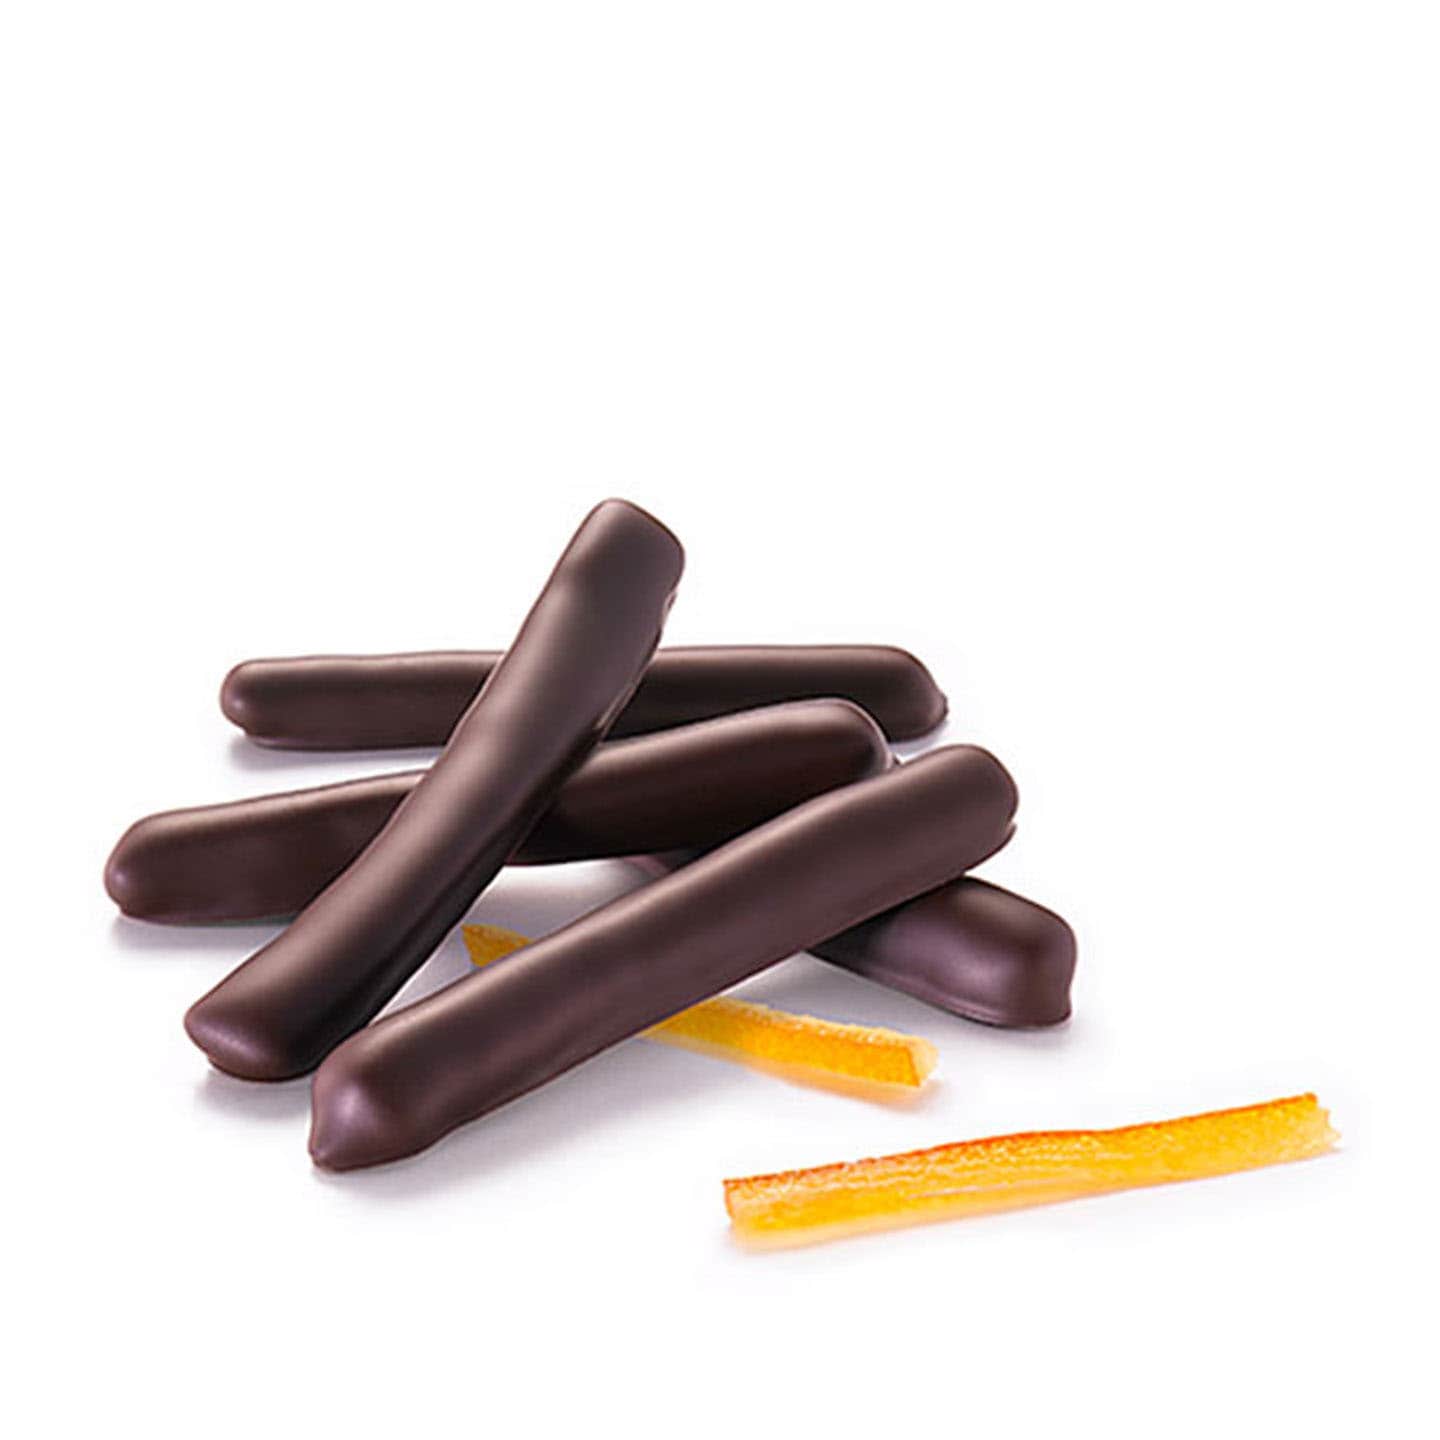 L'orangette au chocolat noir - Very Gourmand